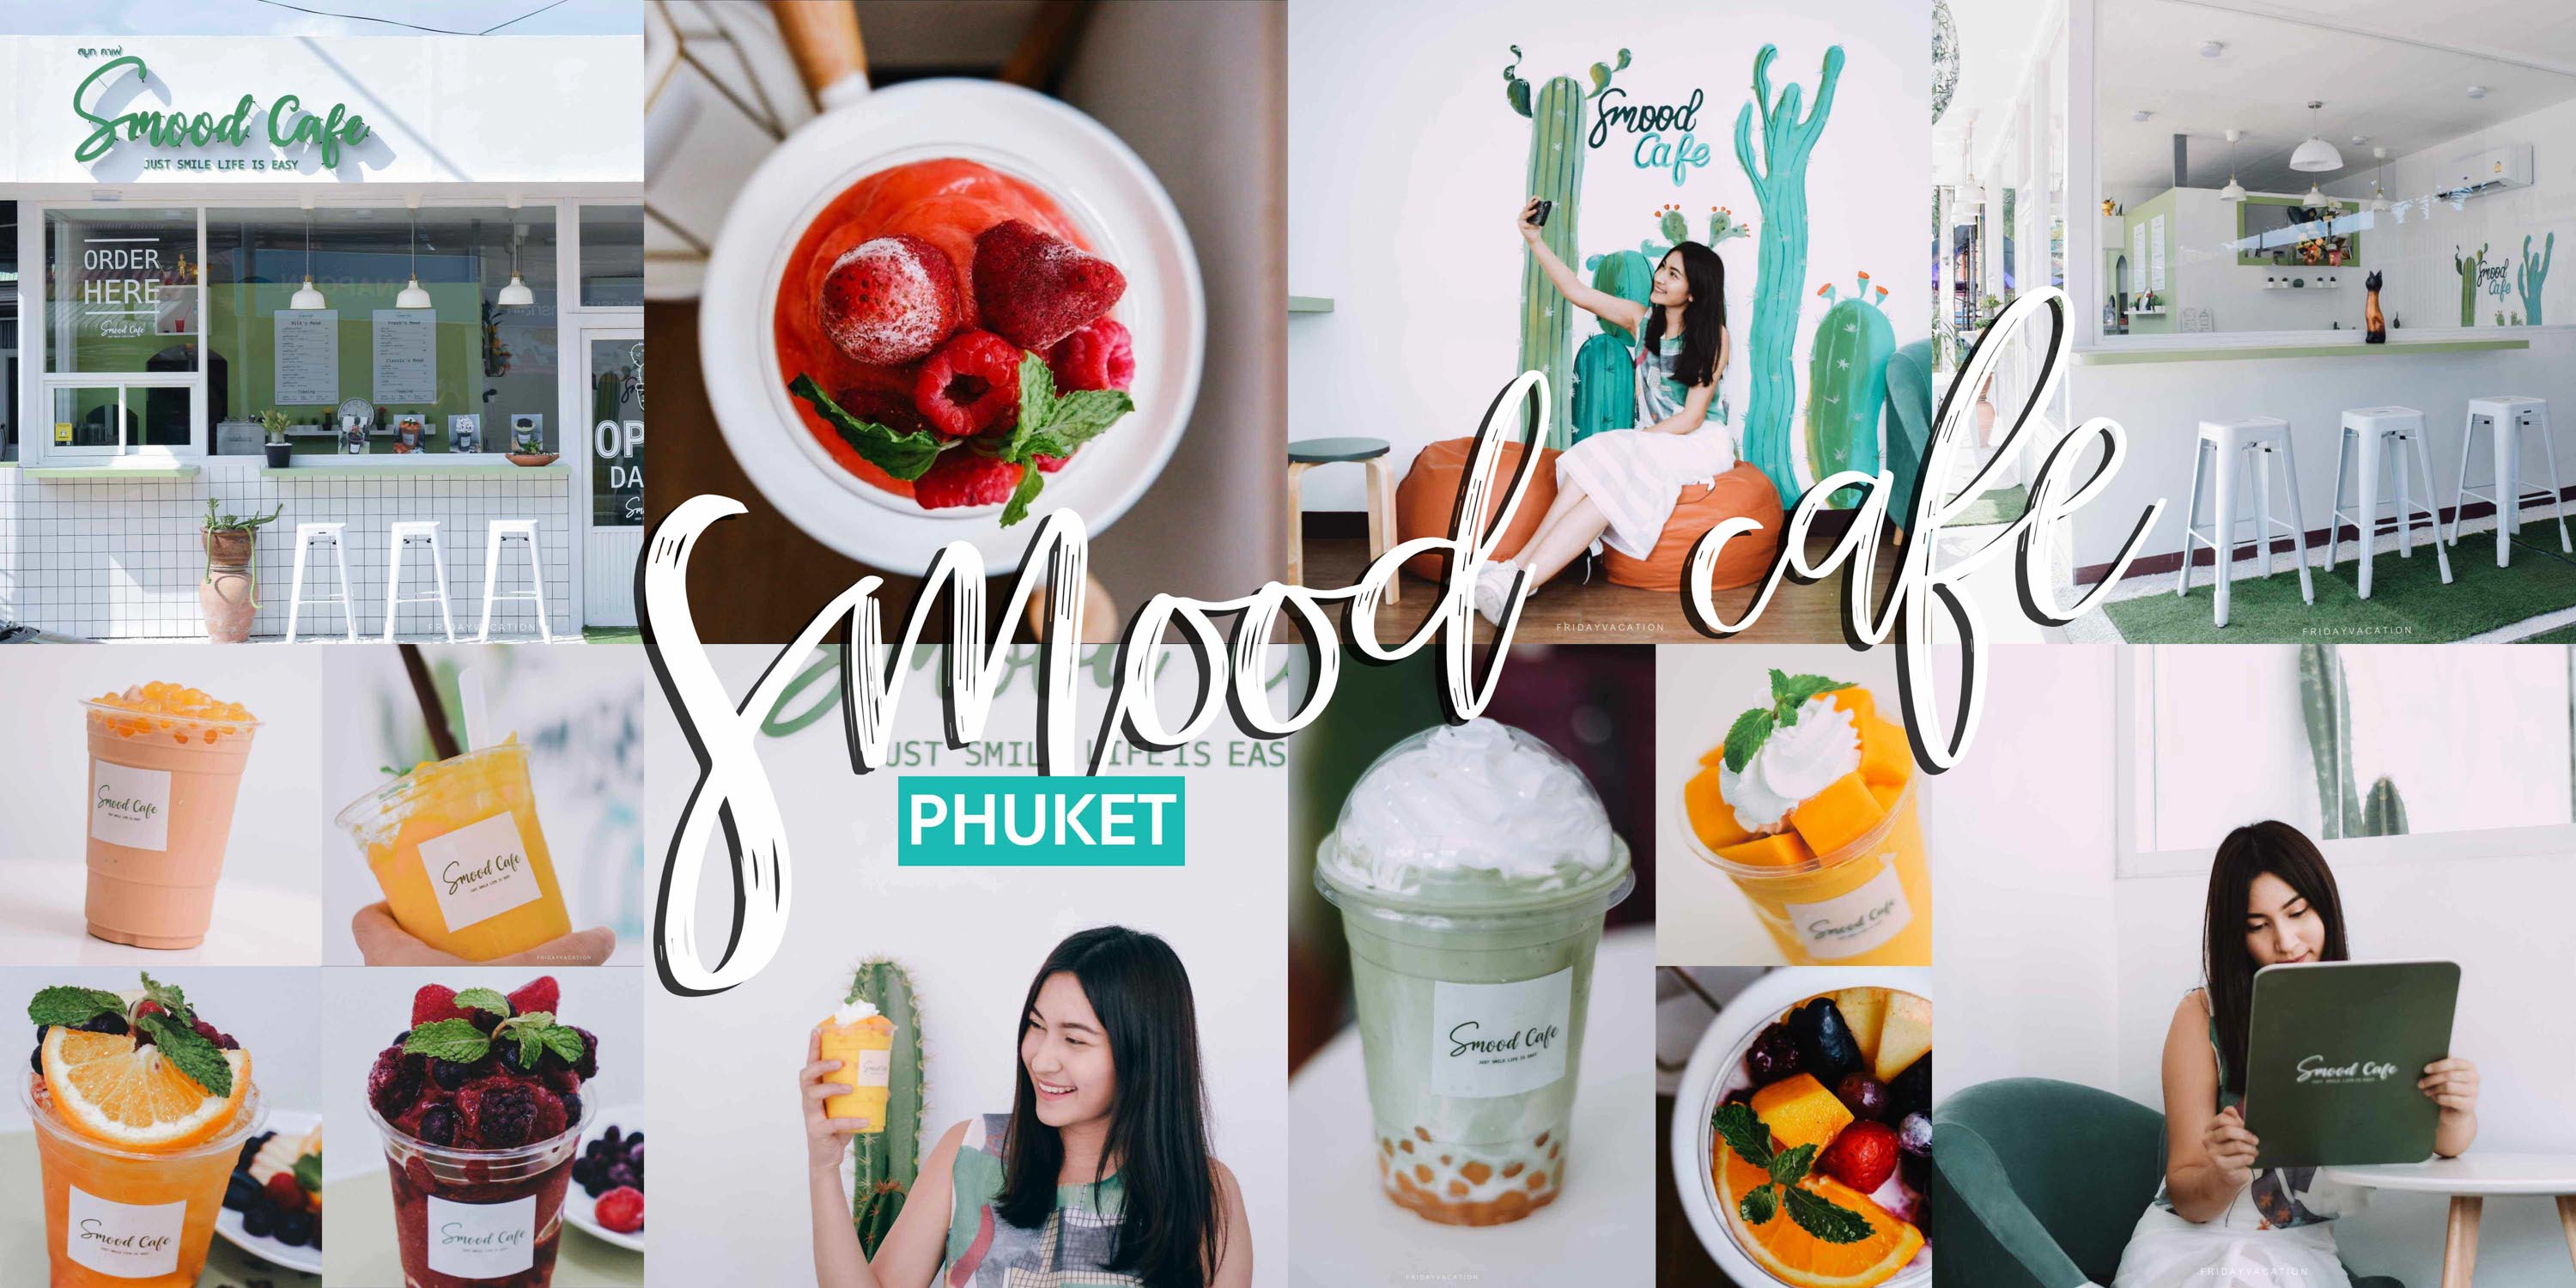 Smood cafe Phuket คาเฟ่น่ารักบรรยากาศคูลๆ